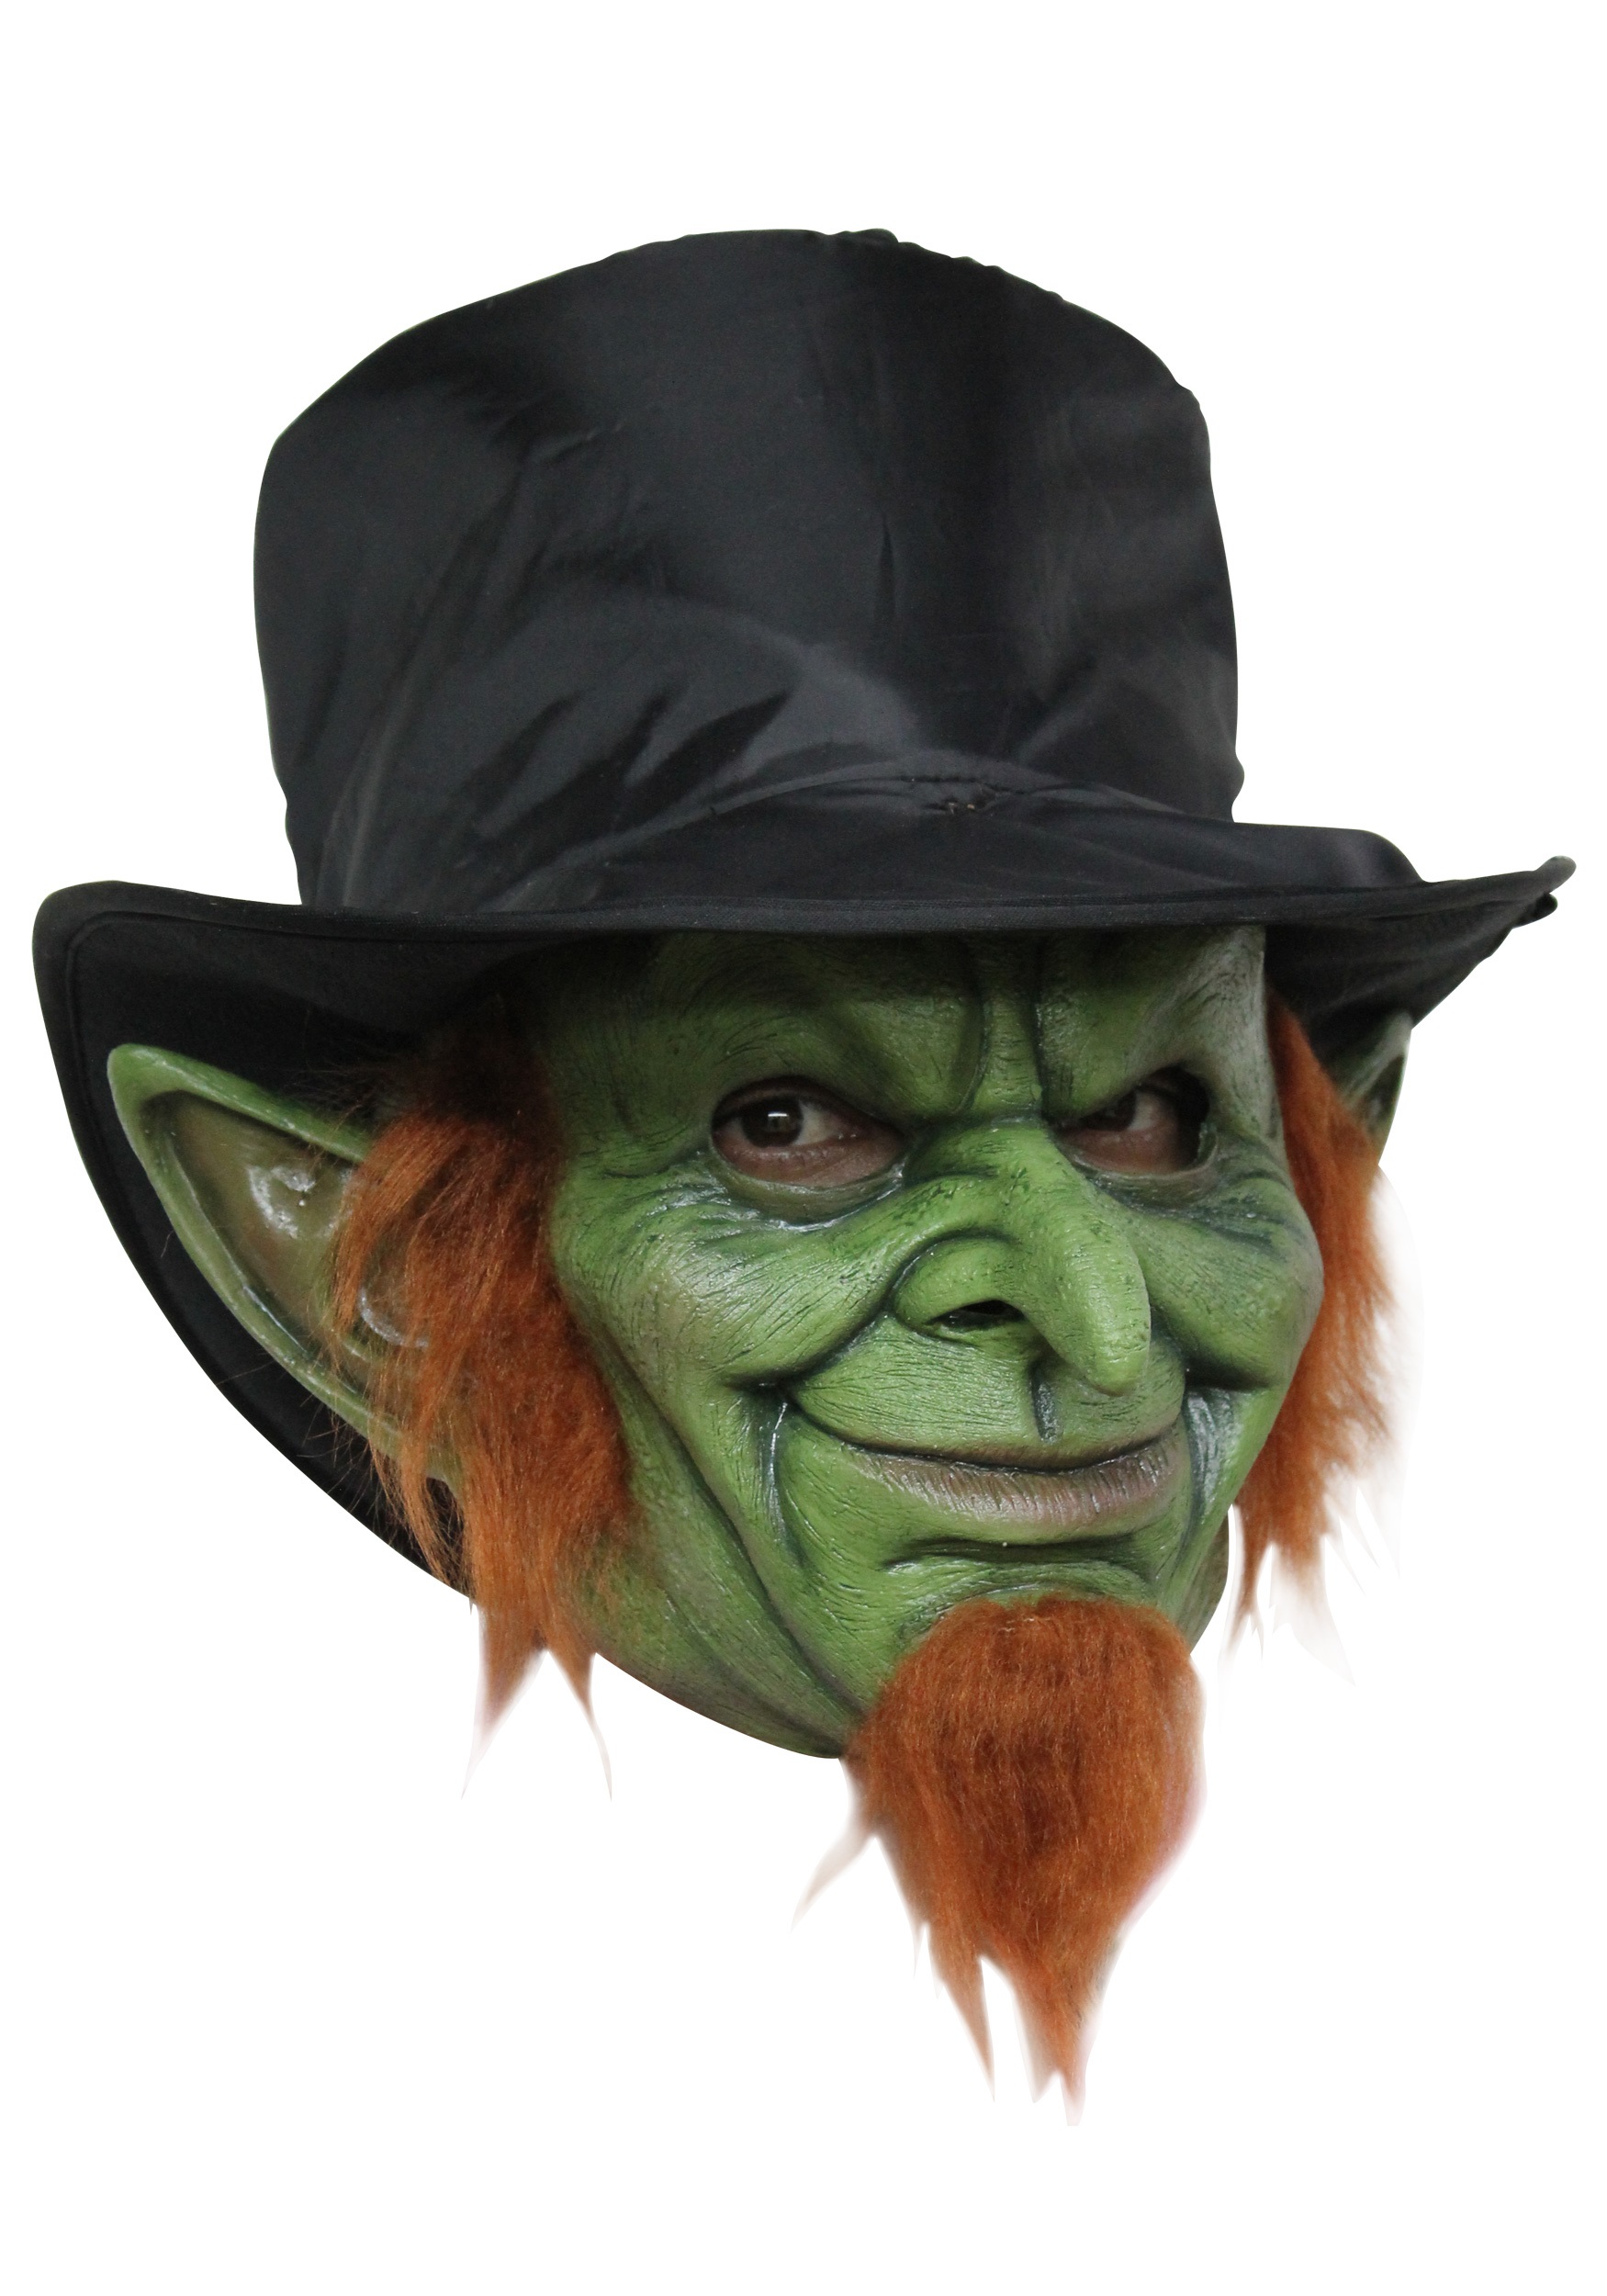 Mad Goblin Mask Costume